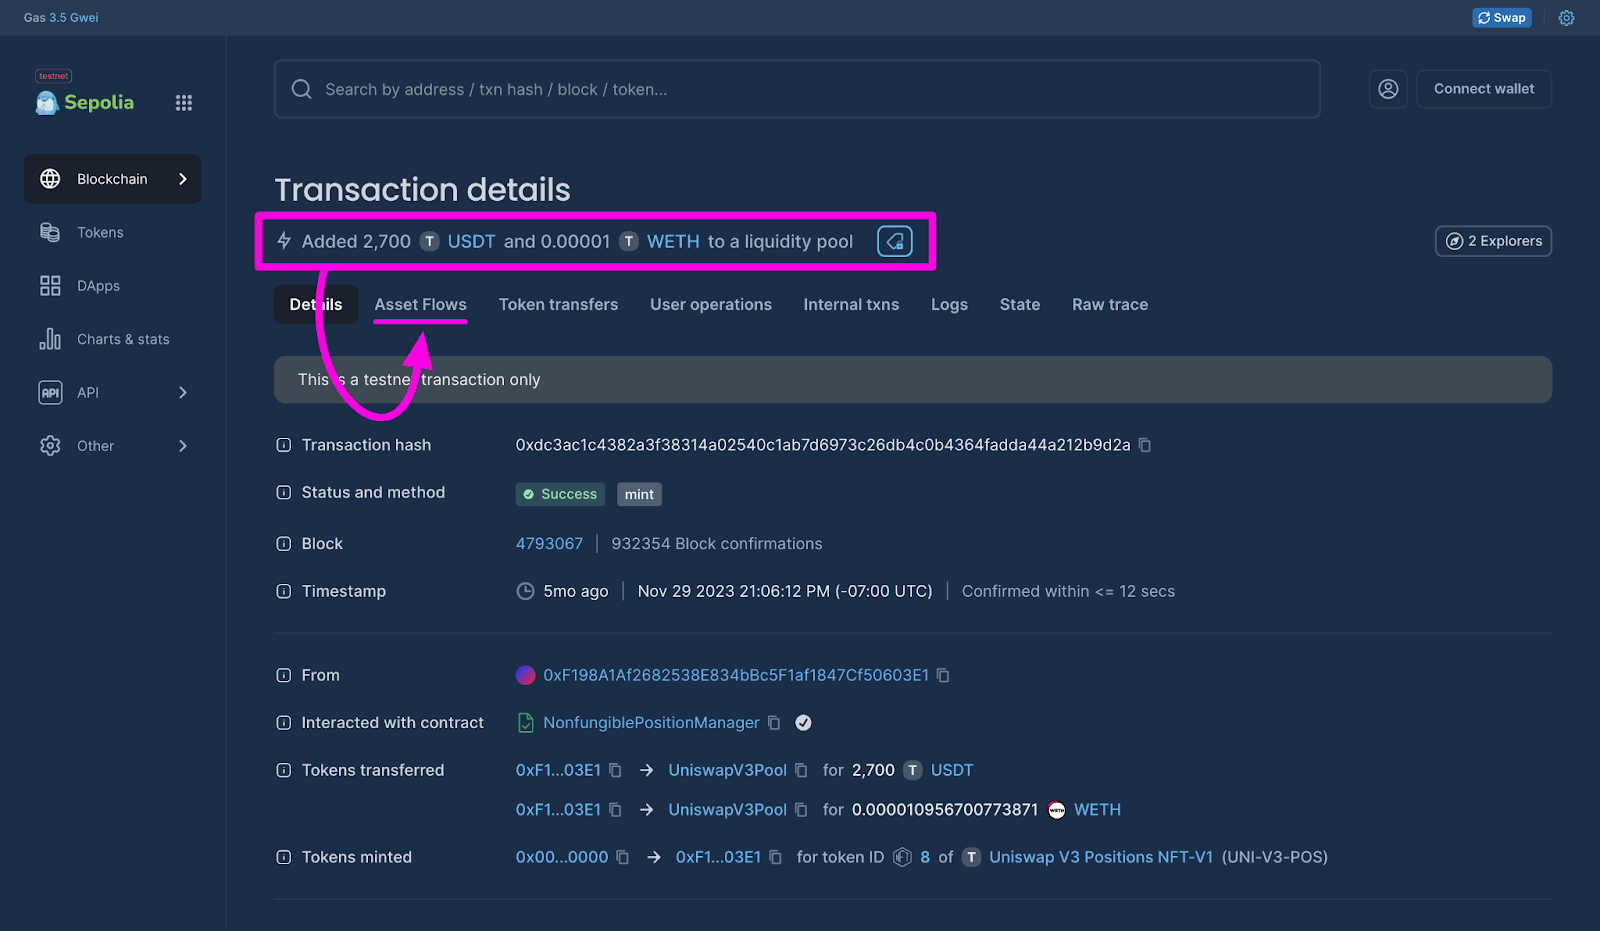 Noves transaction details on Blockscout